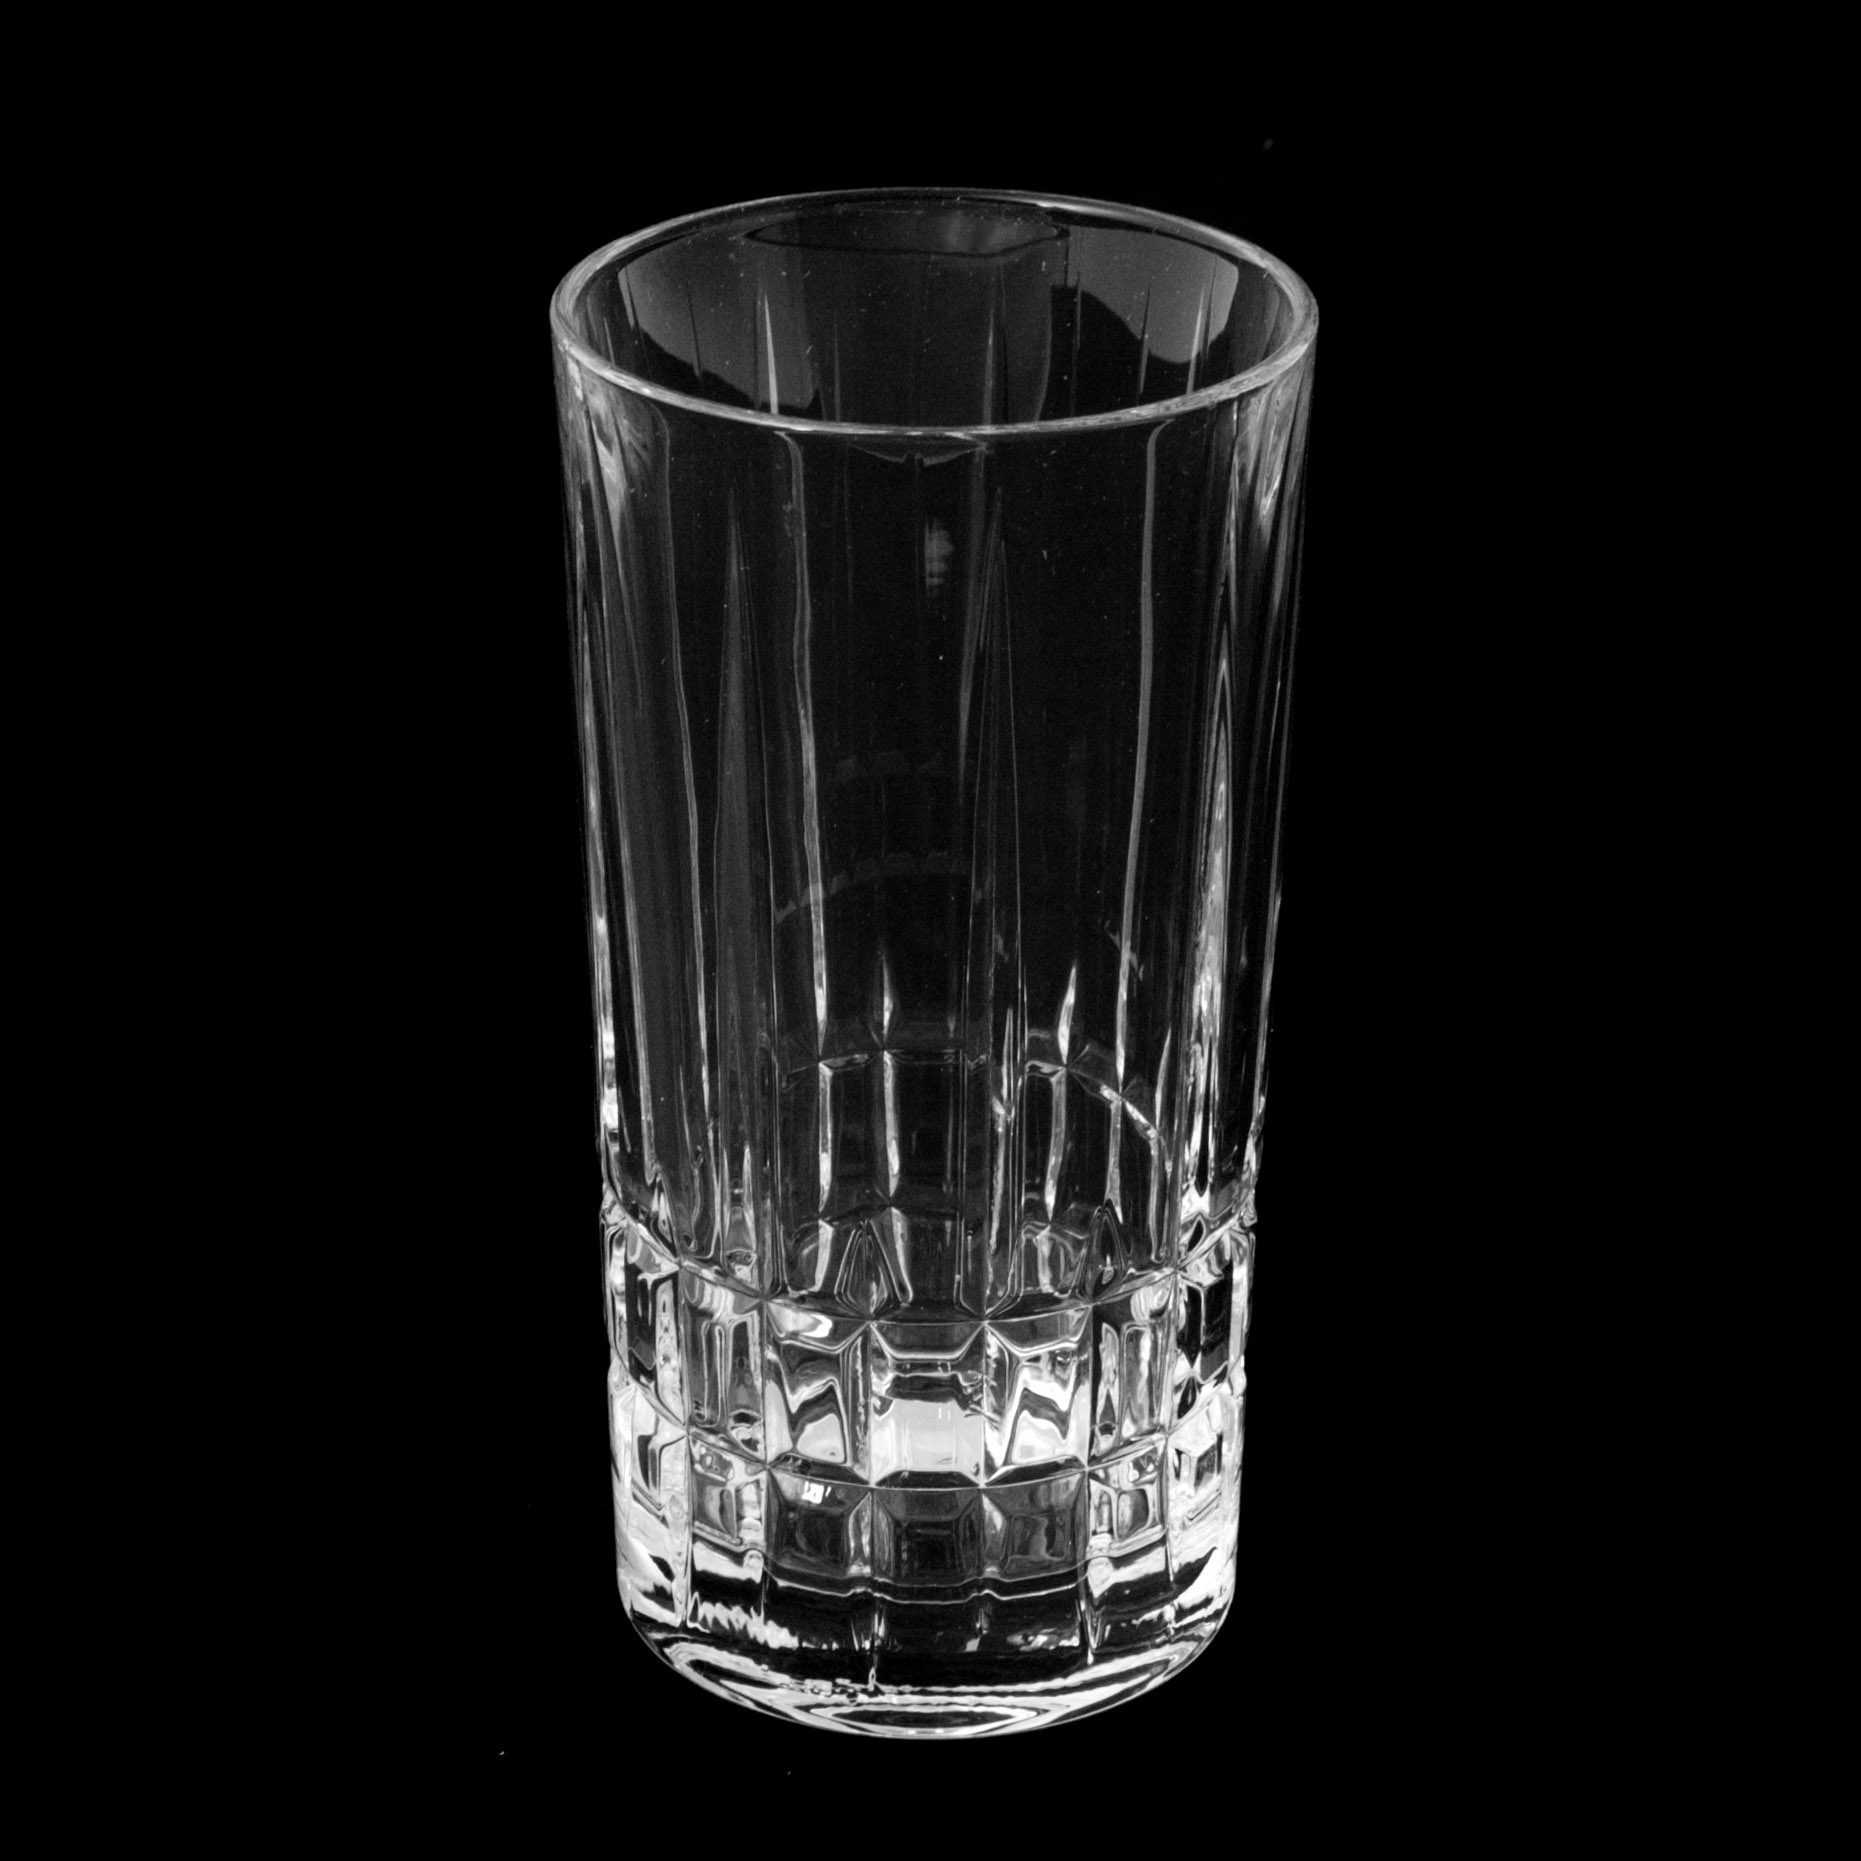 Набор стаканов для воды 350мл 6шт Crystal bohemia a.s. набор стаканов для воды elise 350мл 6шт crystal bohemia 990 22500 0 64300 350 609